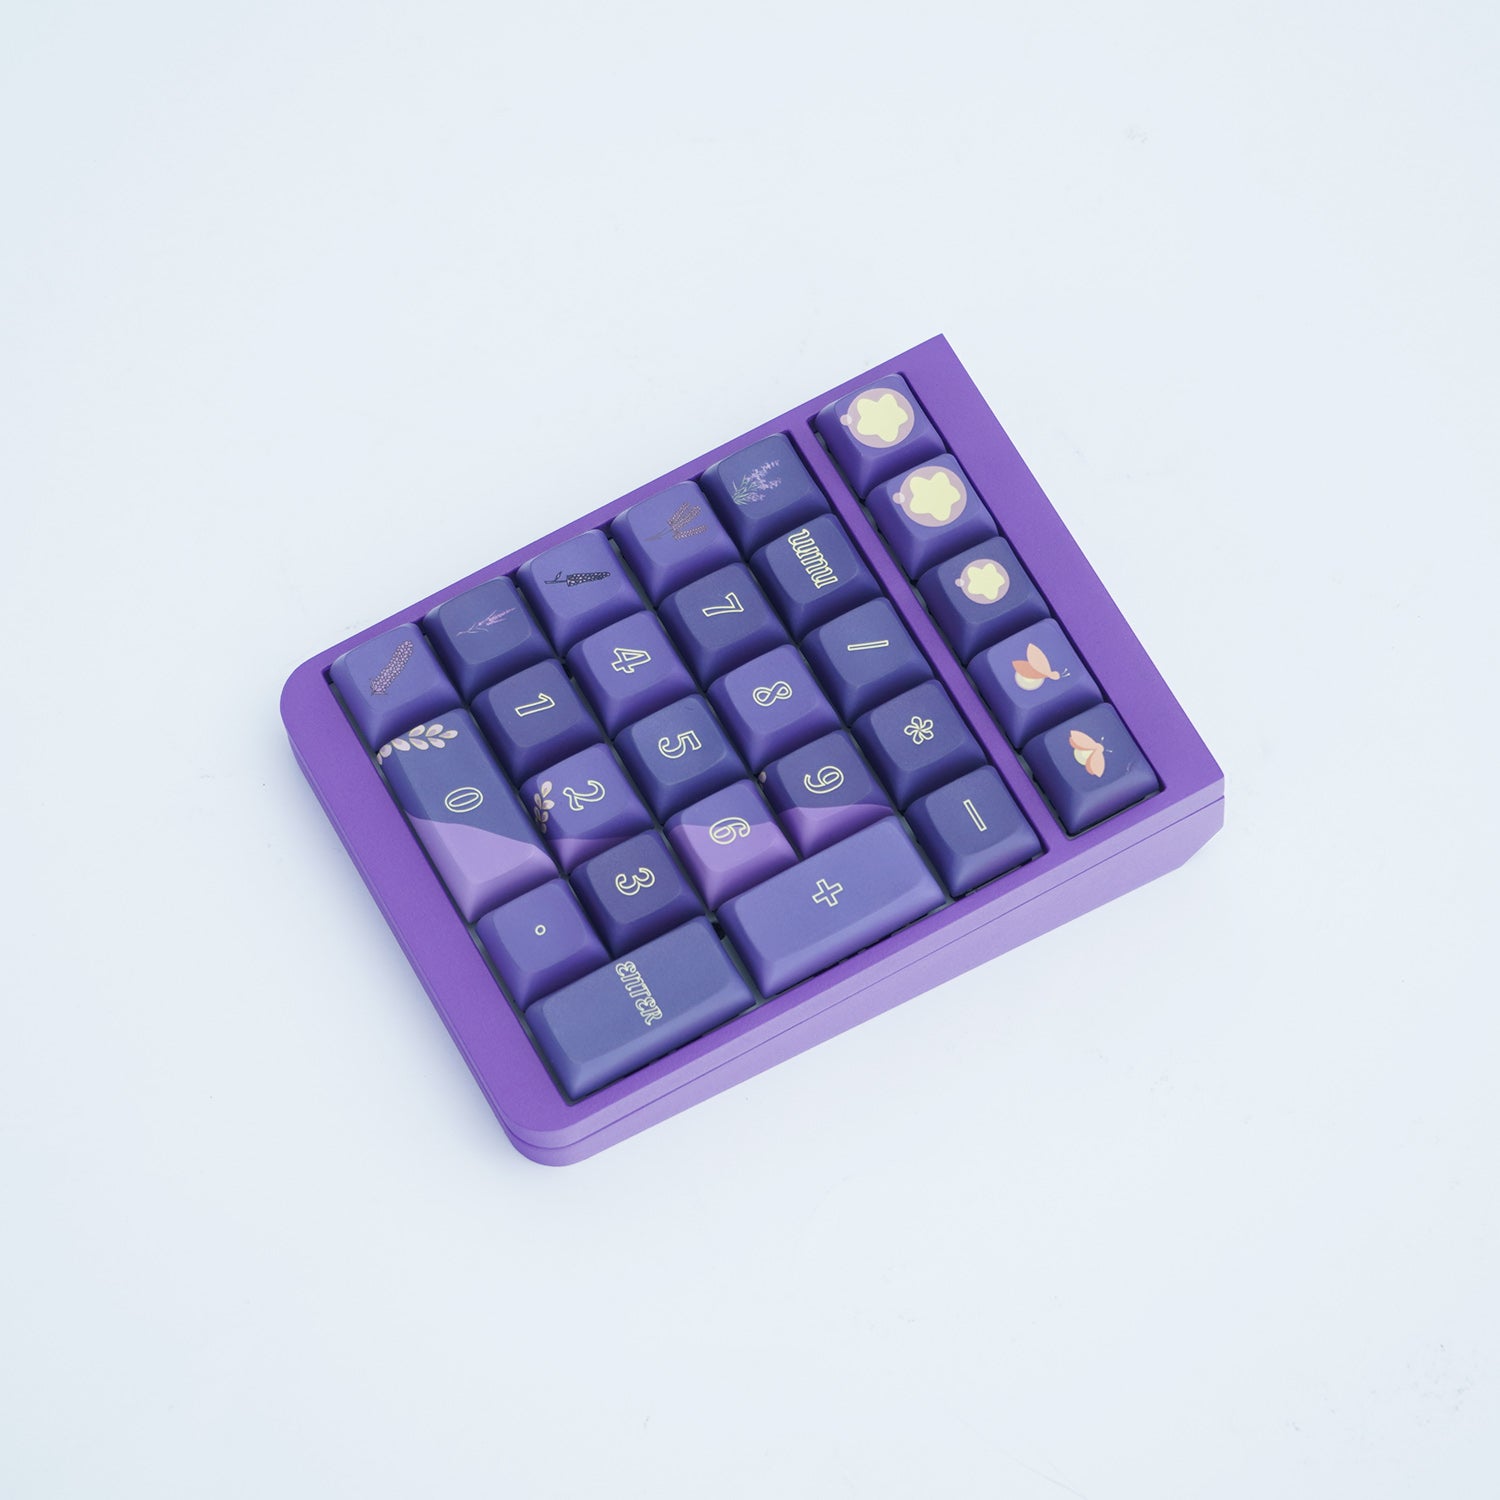 IDOBAO ID27 NumberPad MX Mechanical Keyboard Barebone Kit- No RGB